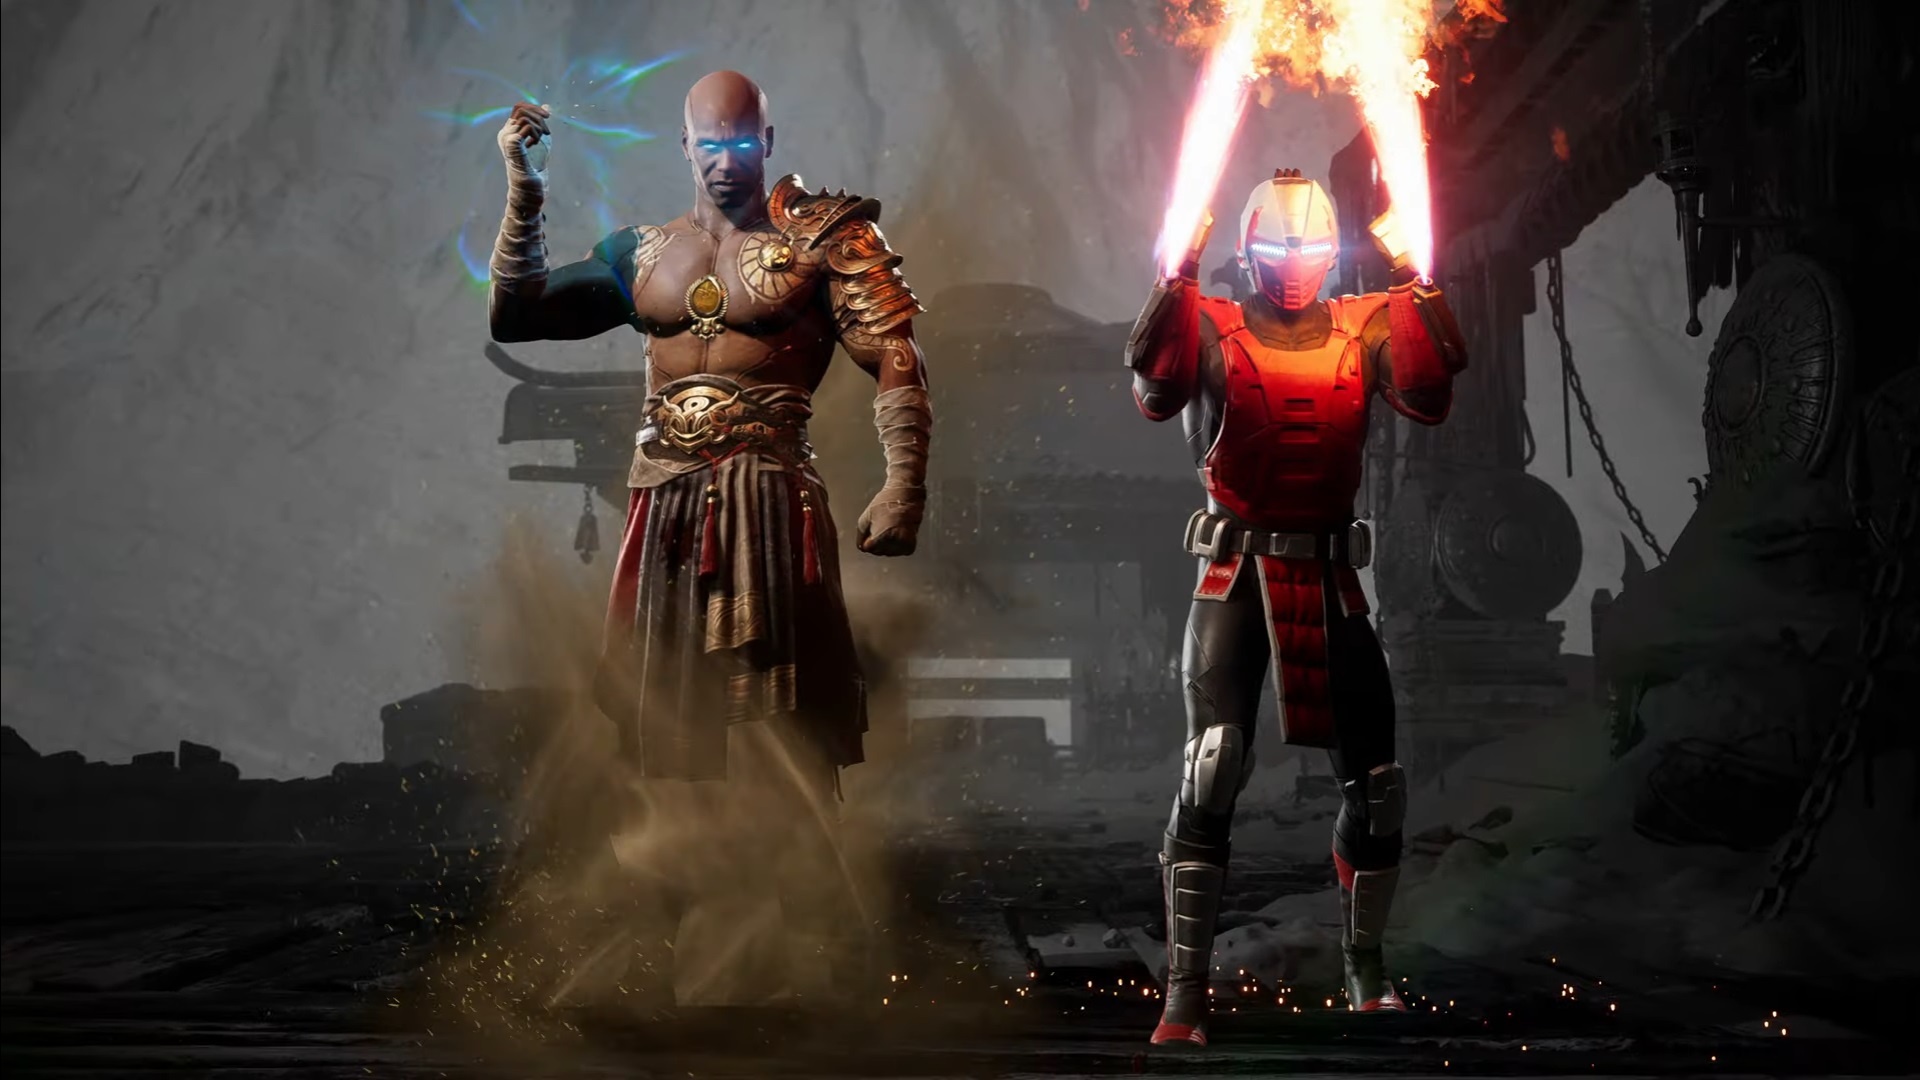 Mortal Kombat 11 Ultimate: Liberado o primeiro trailer de gameplay